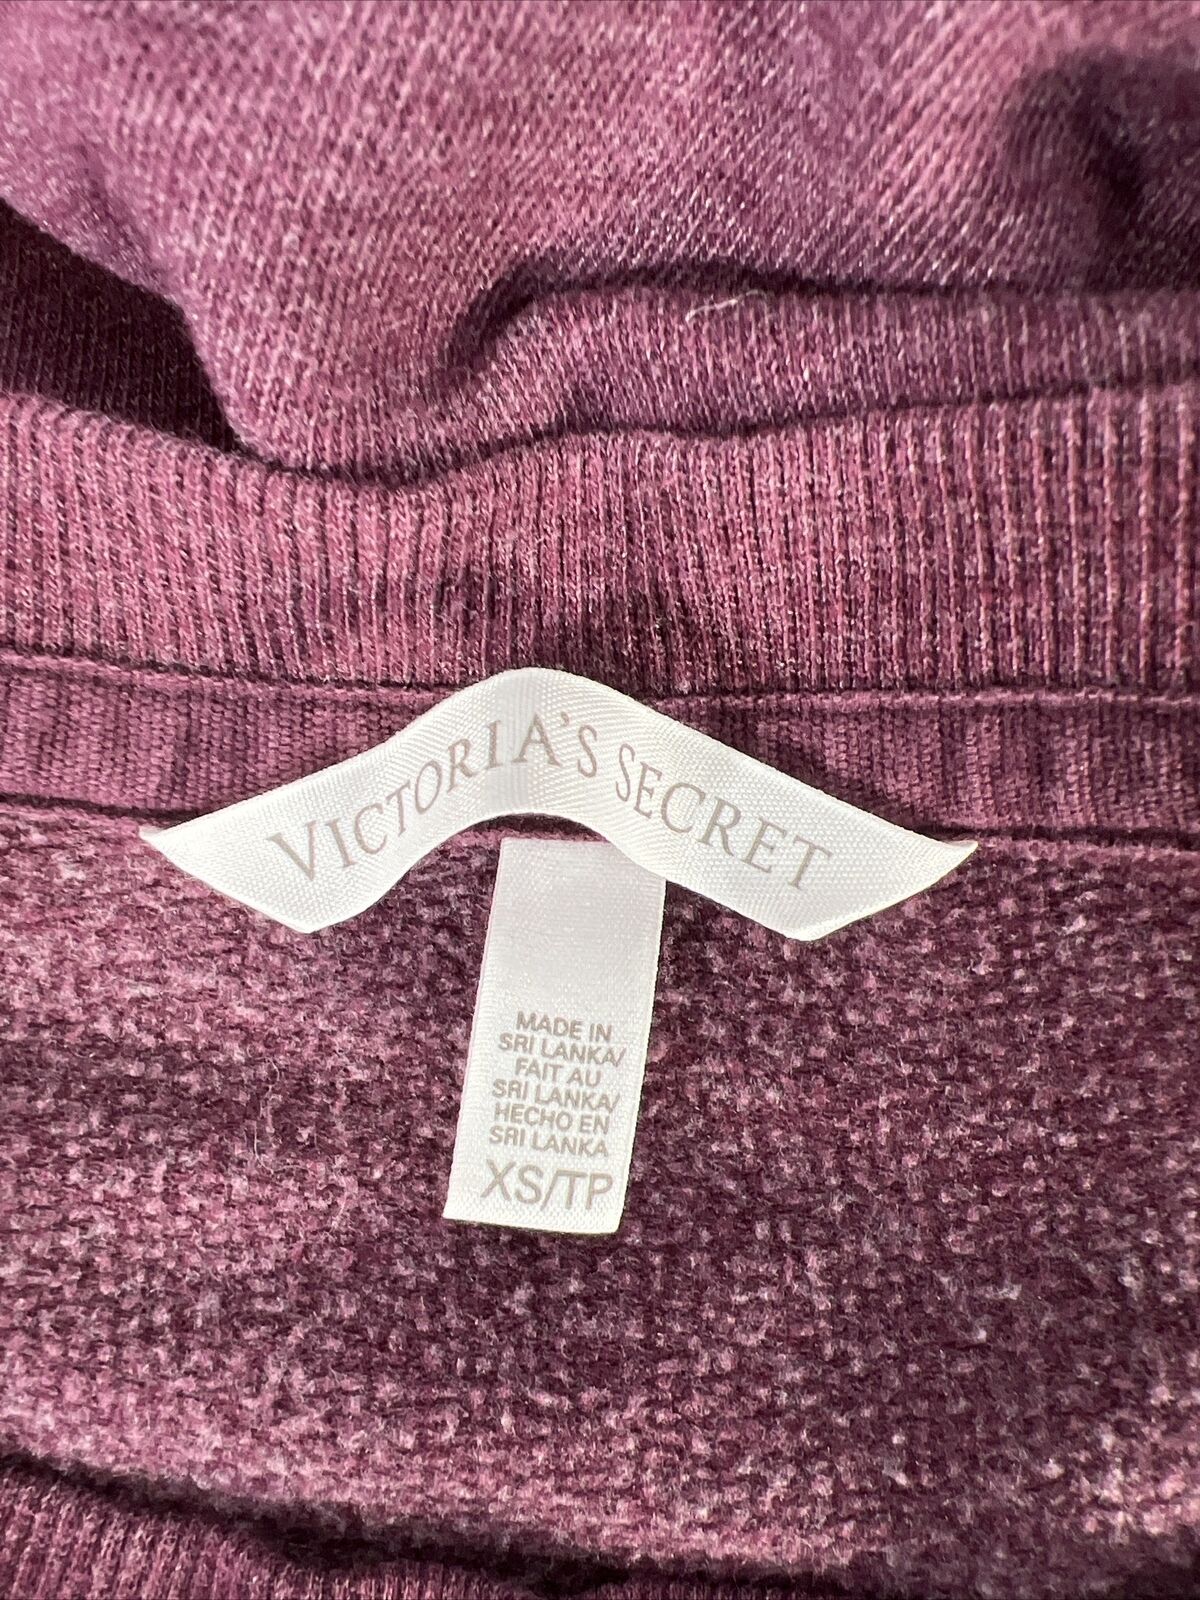 Victoria's Secret Women's Burgundy Long Sleeve Crewneck Sweatshirt - XS